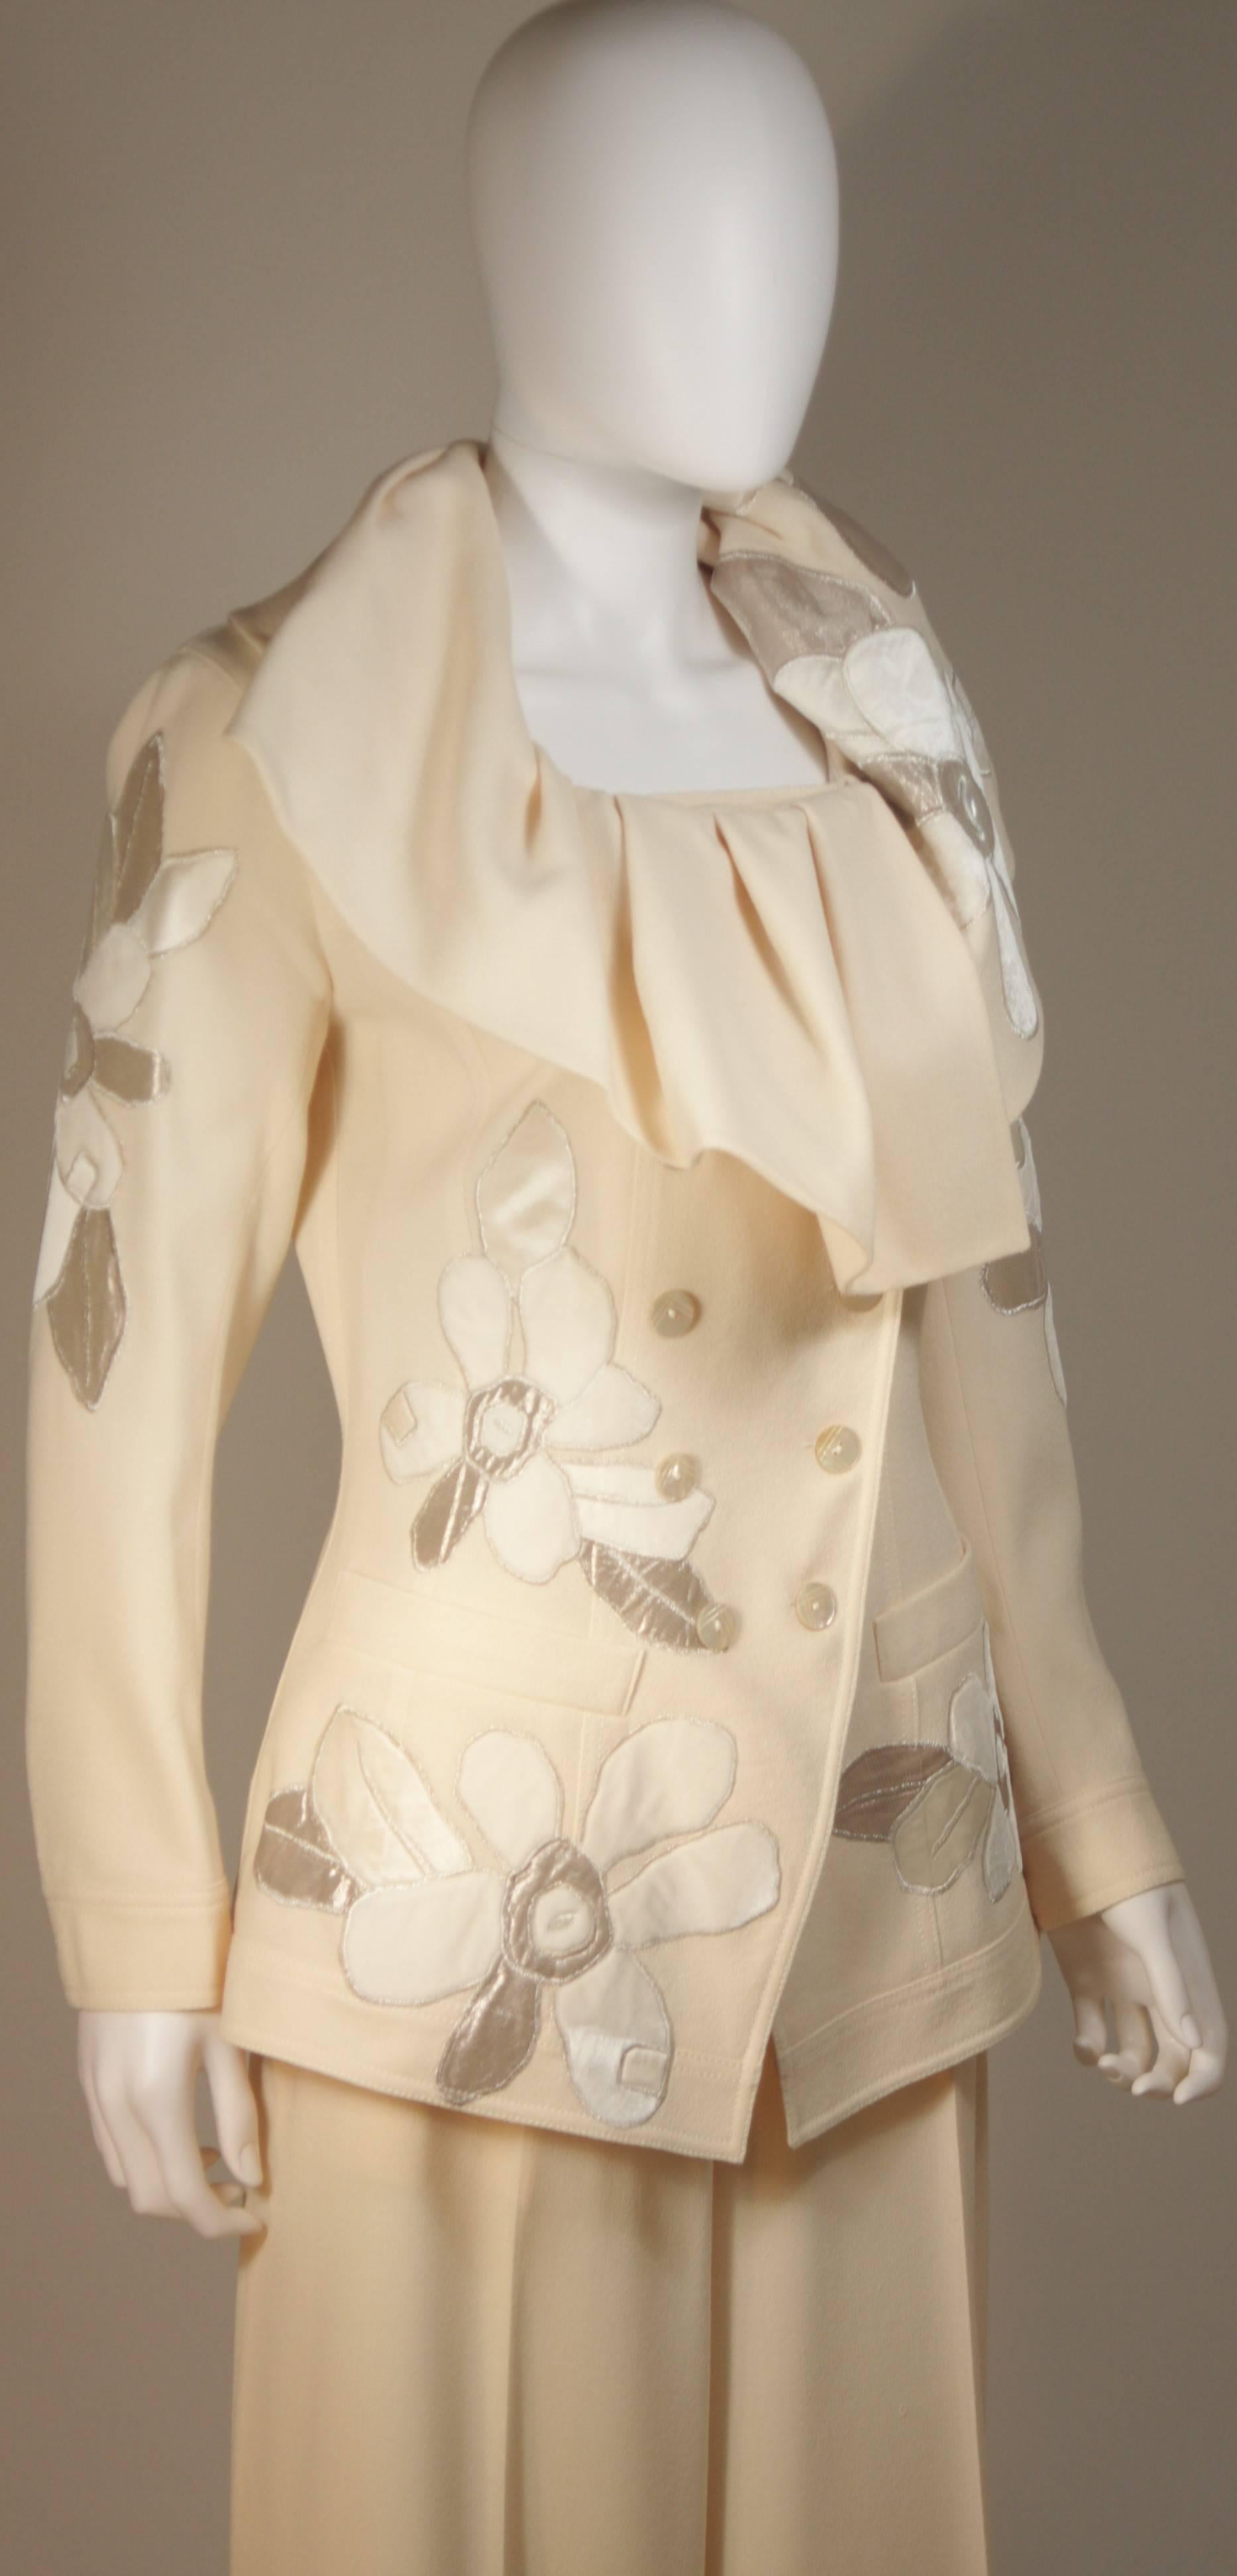 Beige JOHN GALLIANO Ivory Silk Pant Suit with Metallic Applique Size 44 42